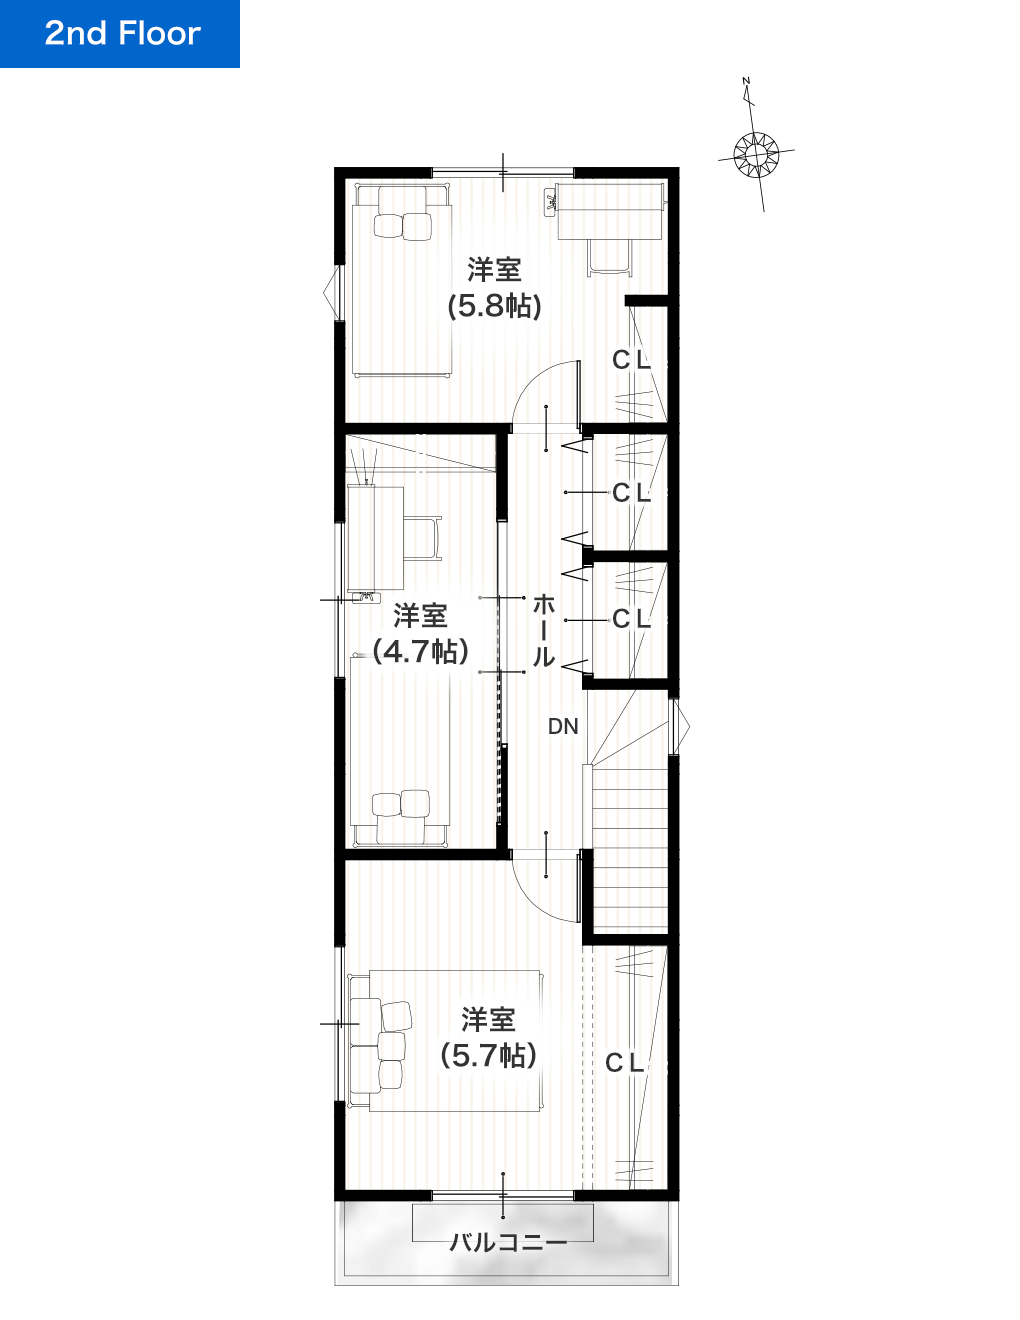 熊本市東区南町2期 23坪 3LDK 建売・一戸建ての新築物件 2階間取り図